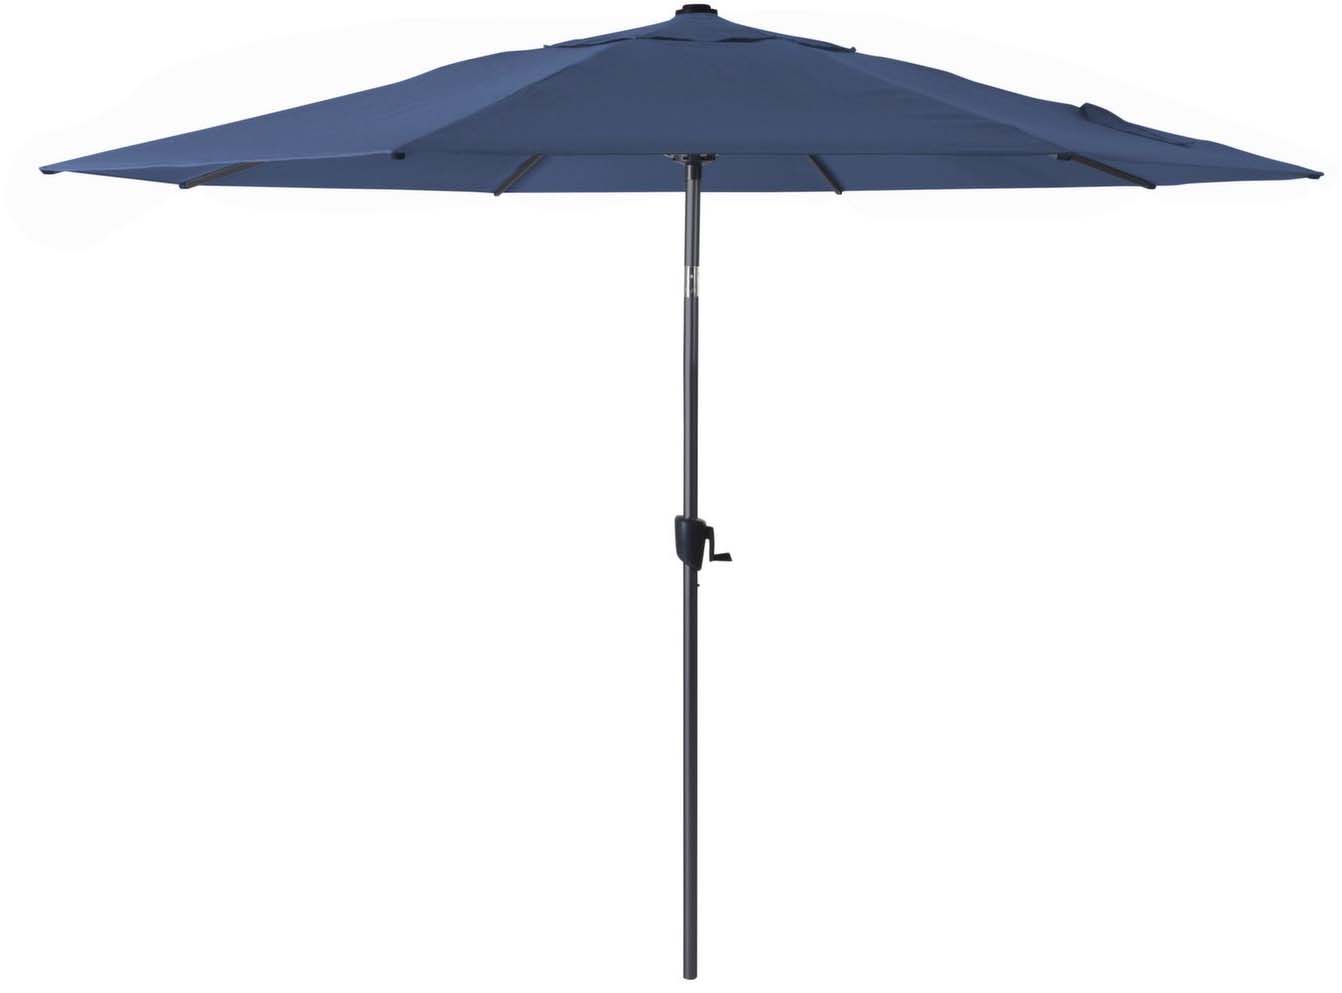 Grand parasol aluminium 3.5 m roseau gris et bleu